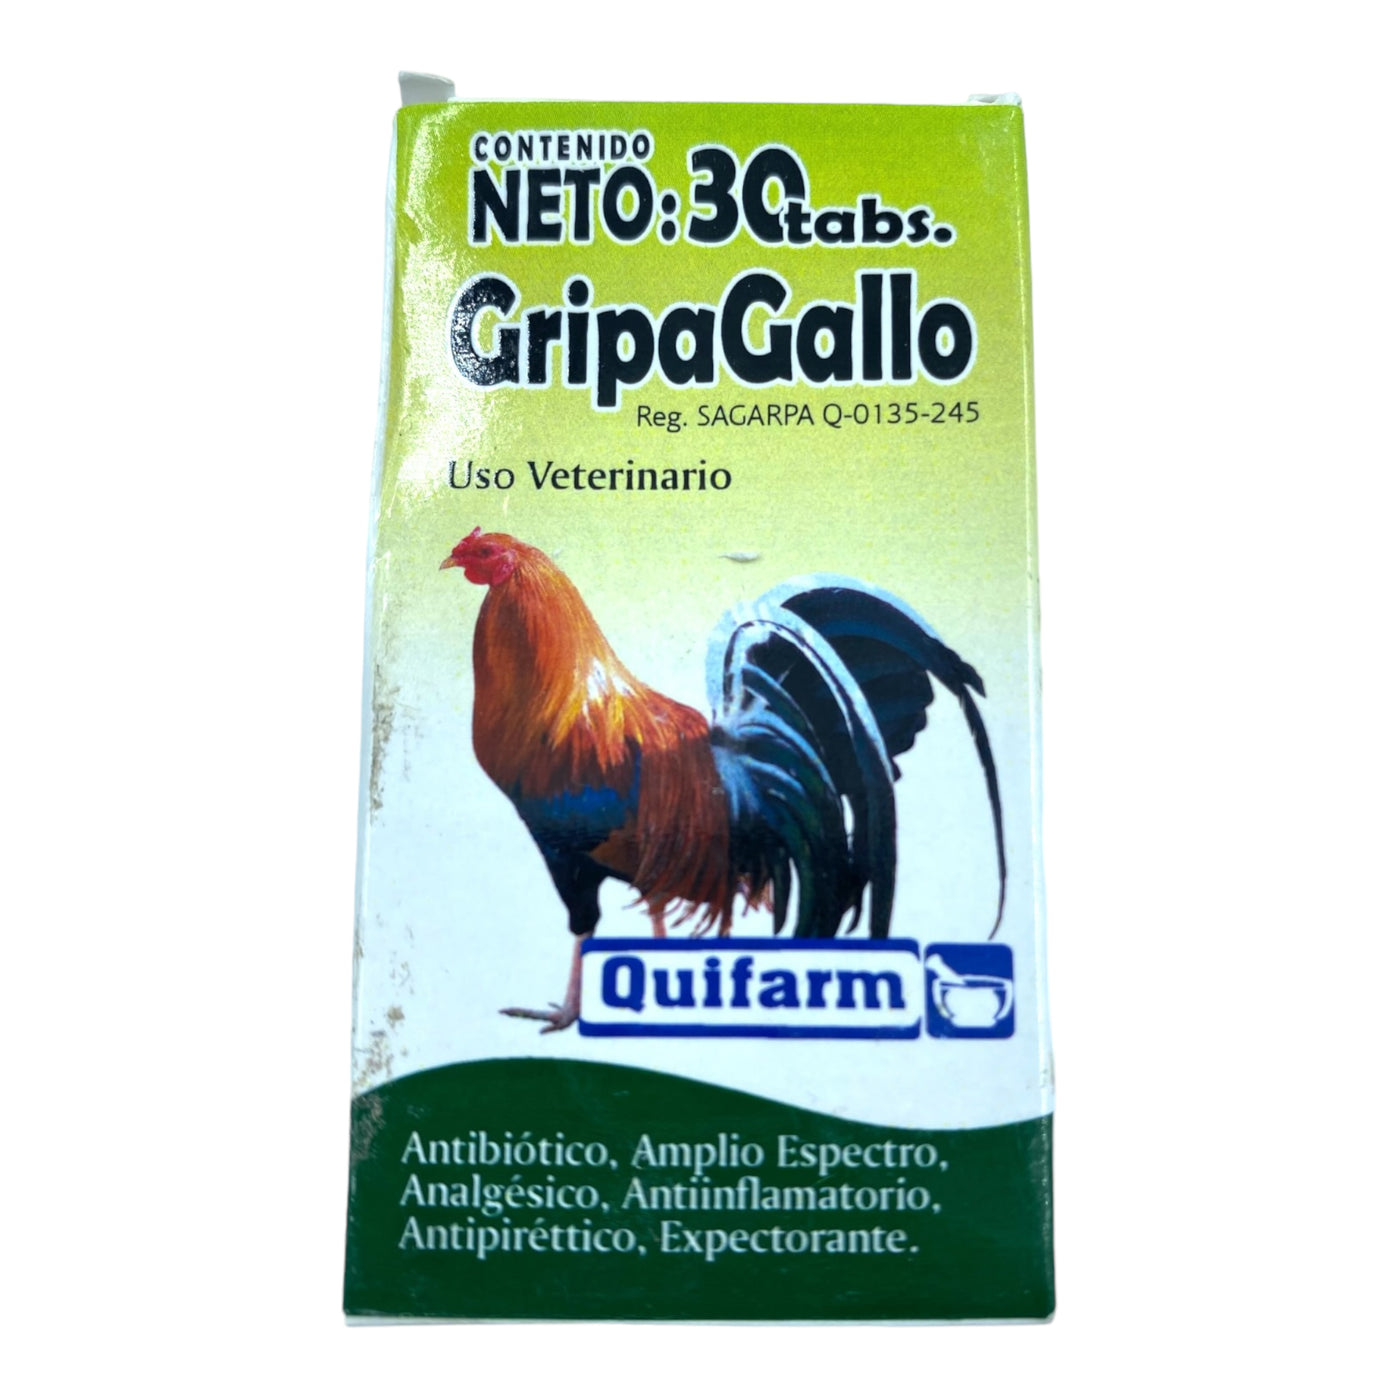 GripaGallo 30 Tabs